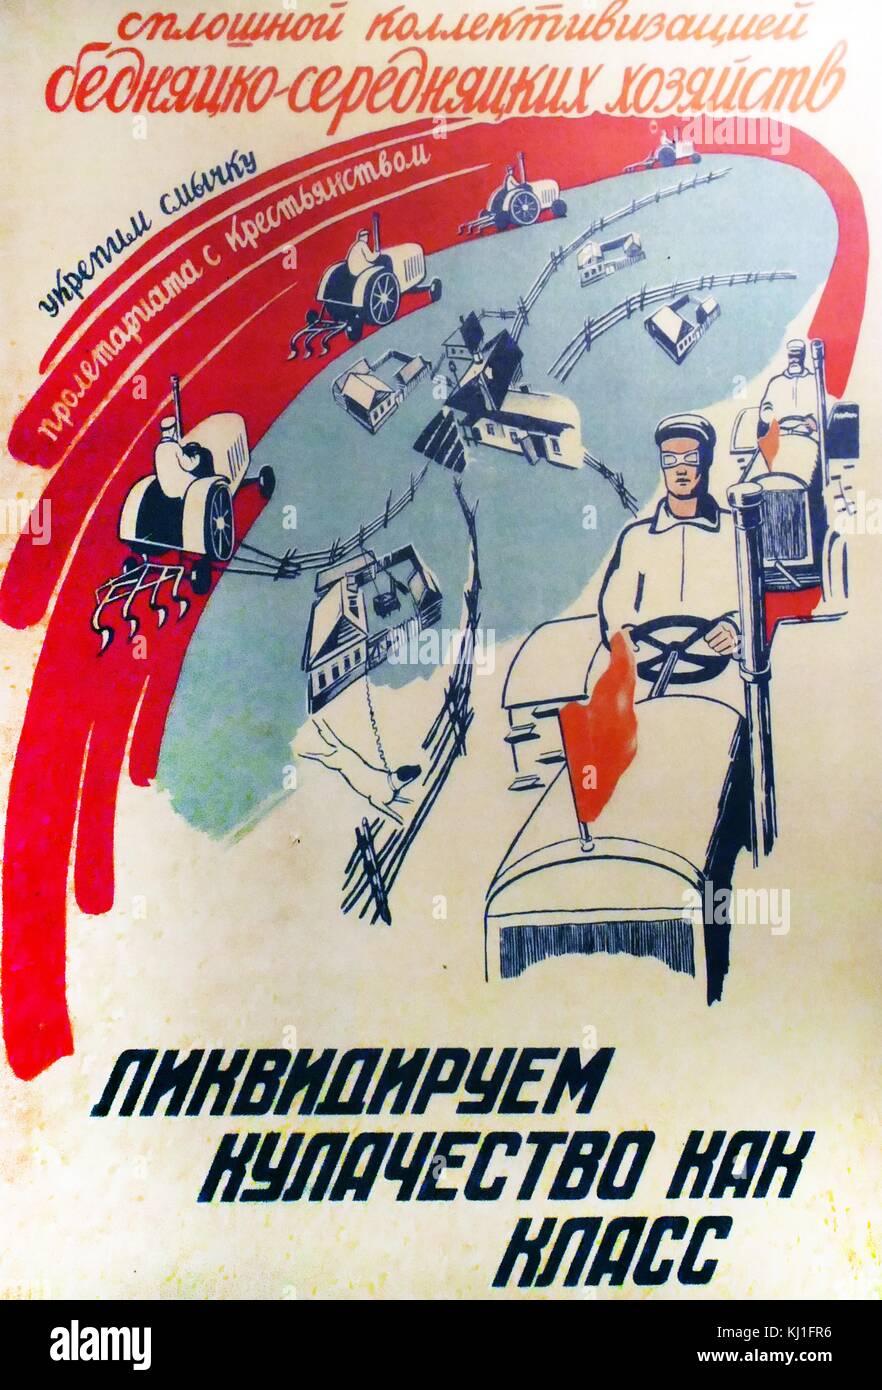 stalin propaganda collectivisation